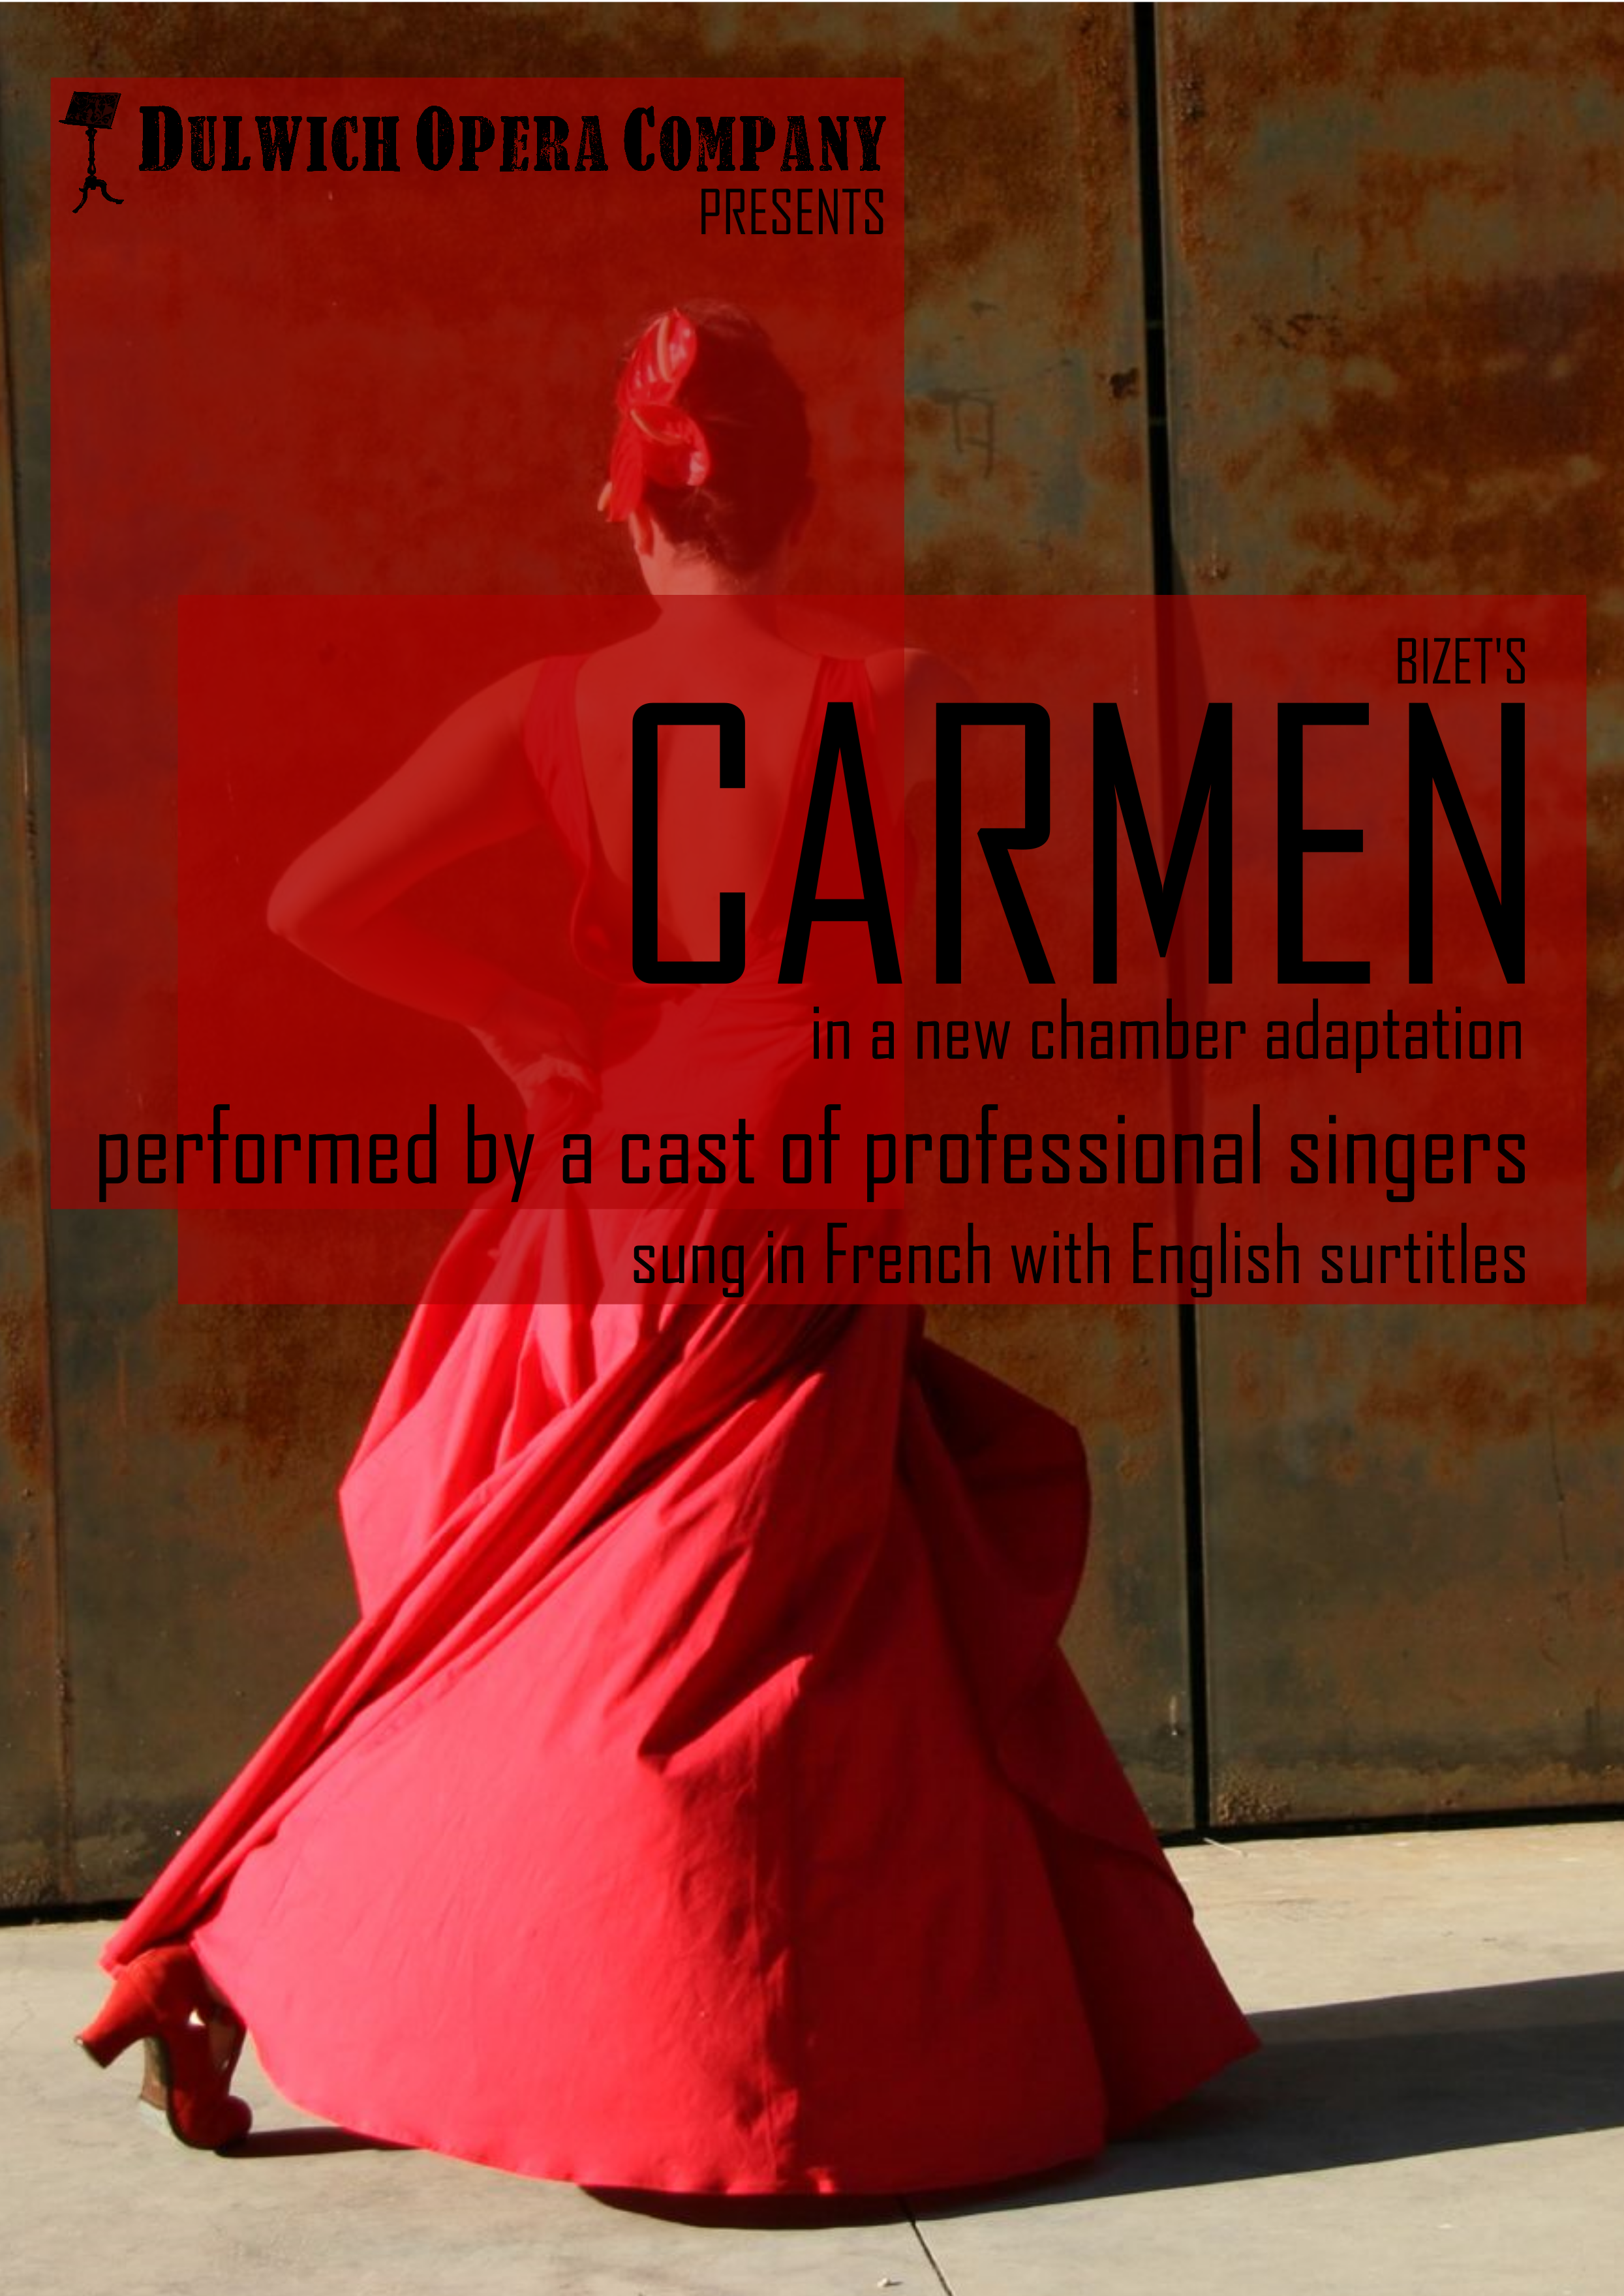 Bizet’s Carmen comes to Herne Hill